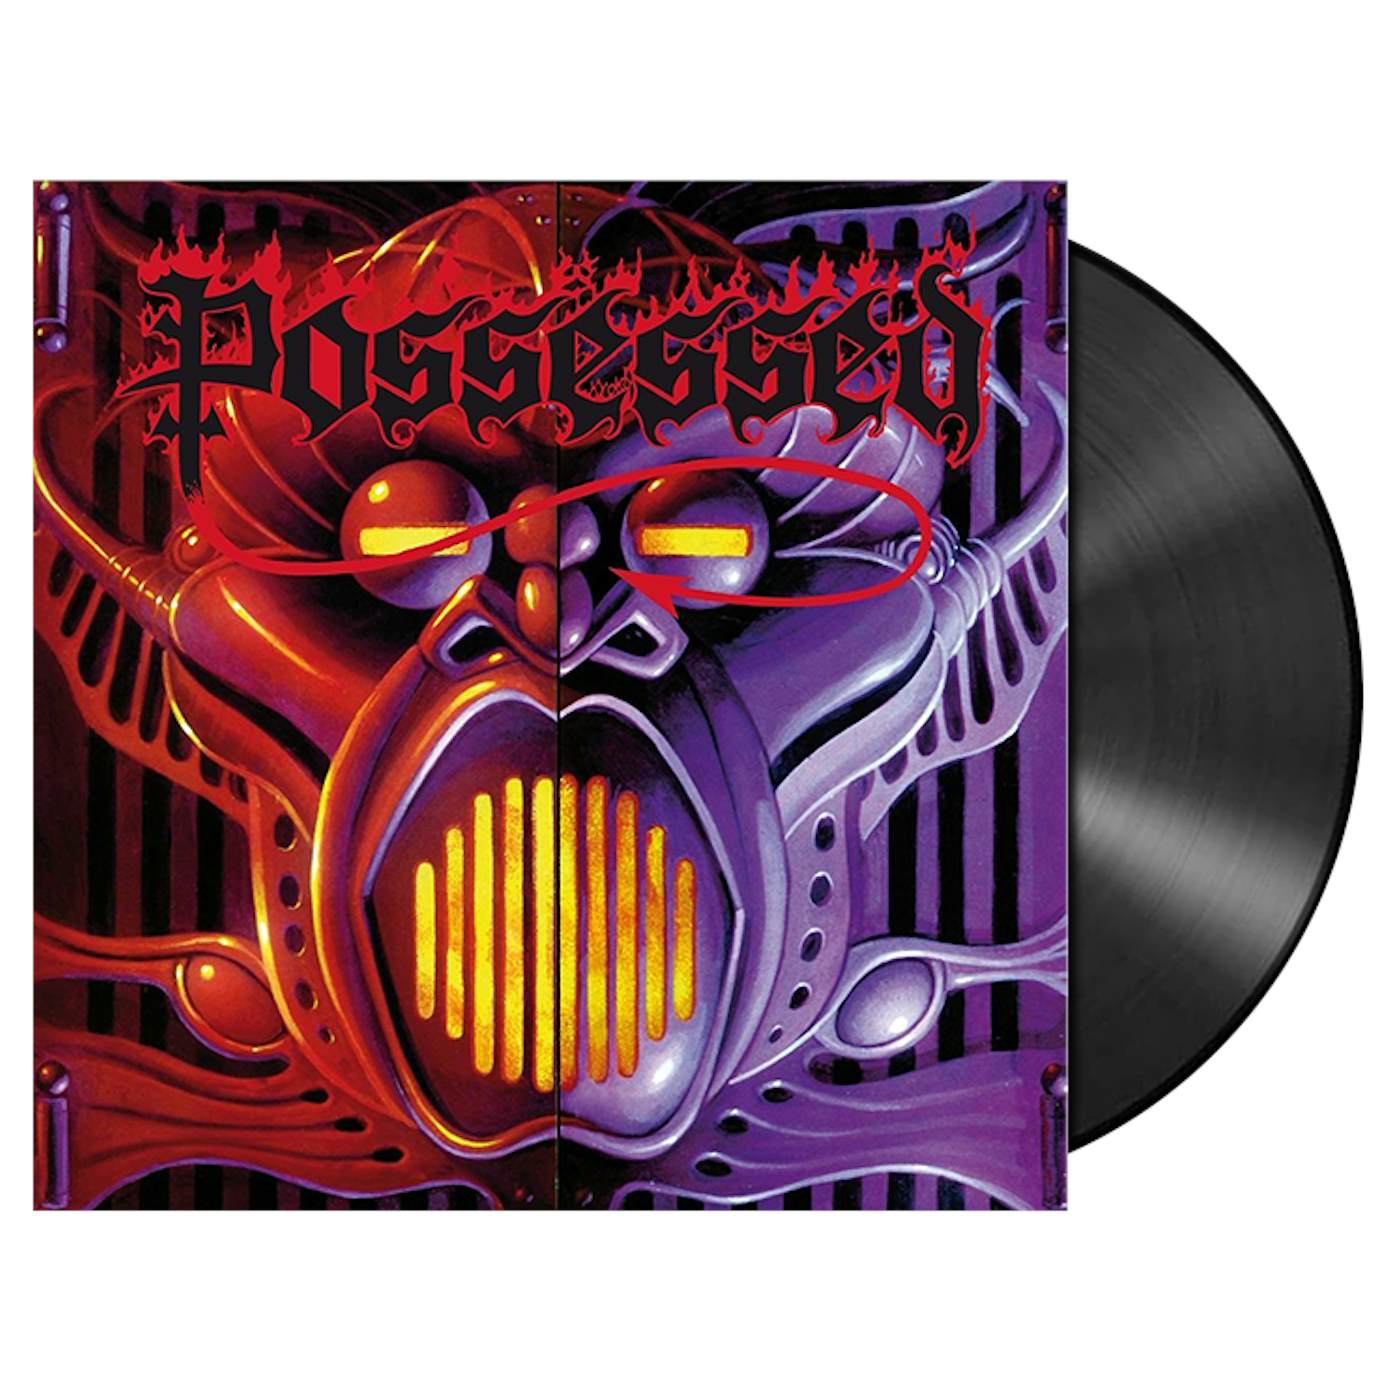 POSSESSED - 'Beyond The Gates' LP (Vinyl)